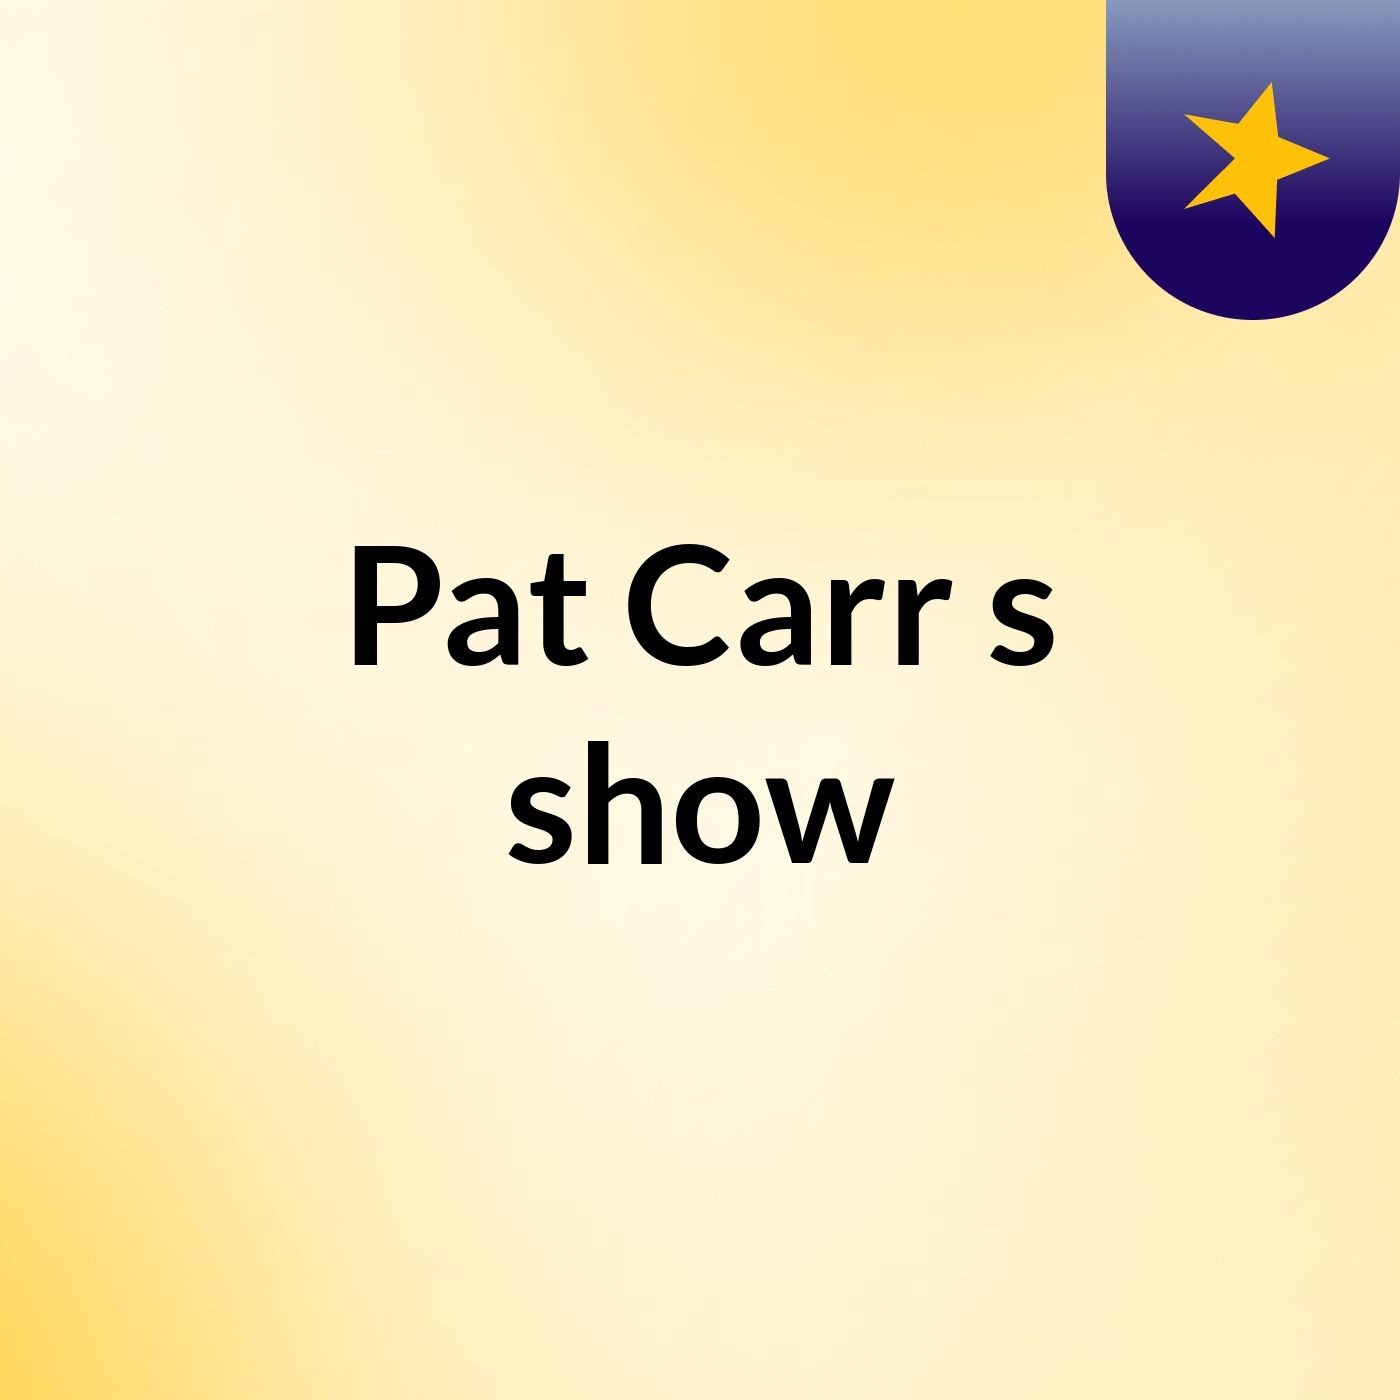 Pat Carr's show